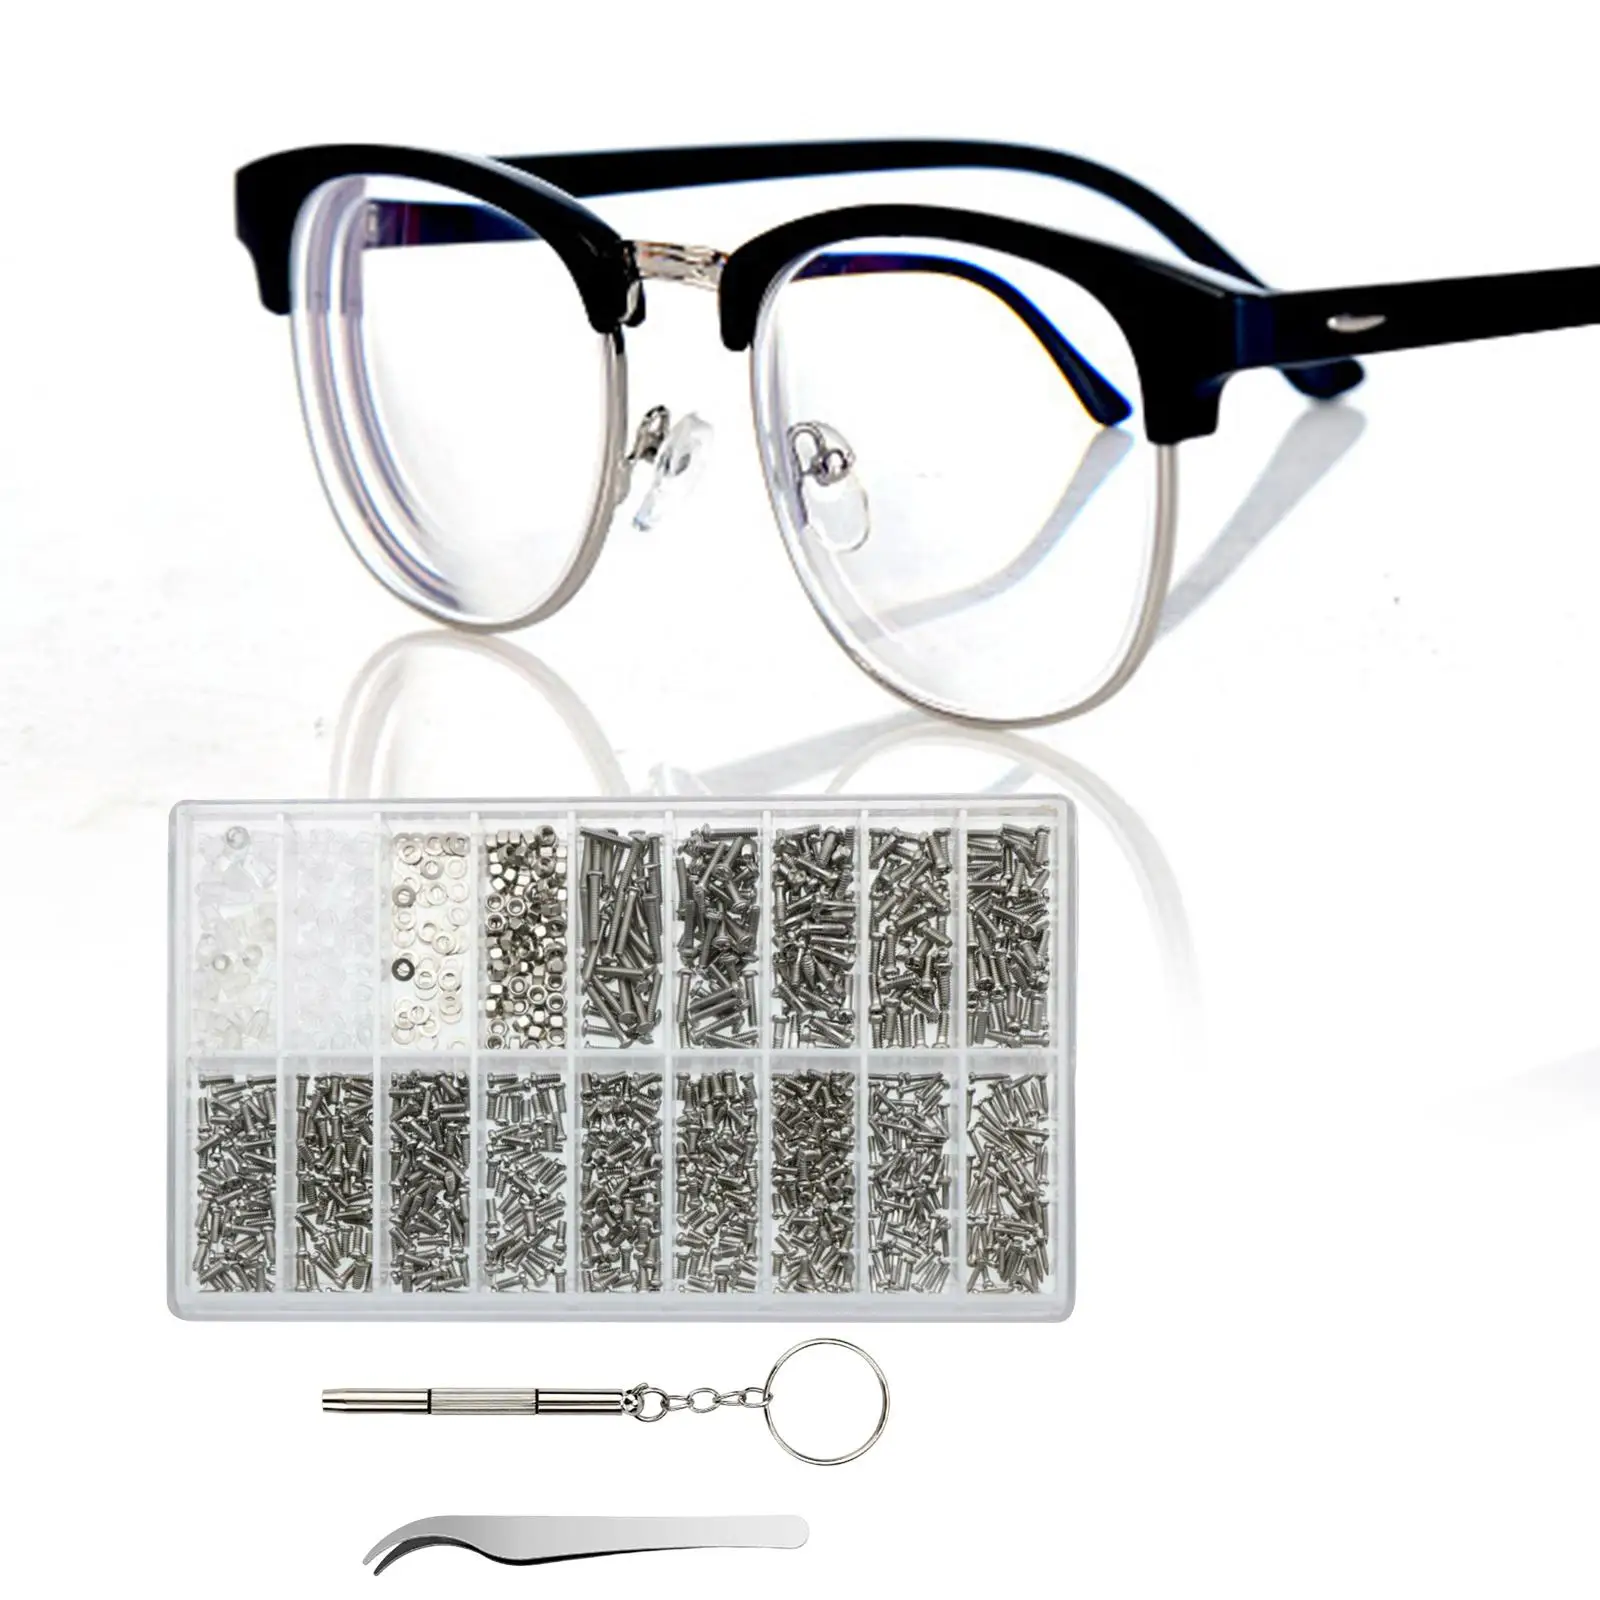 Complete Eyeglass Repair Kits Nose Pads with 1200 Tiny Screws Nuts Eye Glasses Repairing Kit for Clock Spectacles Repair Tool